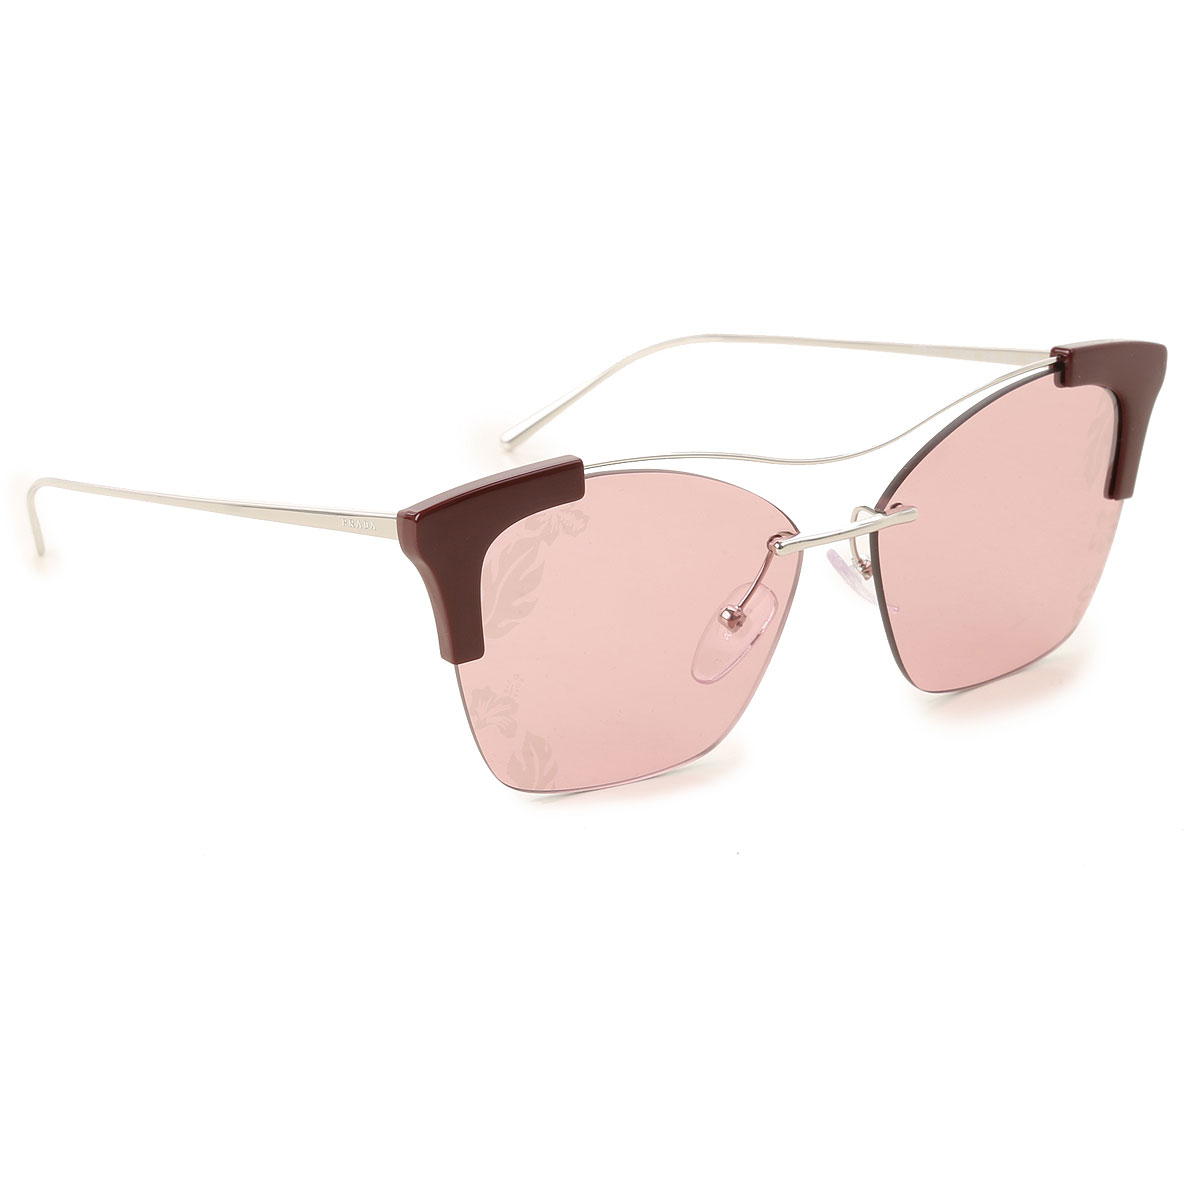 Sunglasses Prada, Style code: spr21u-a88-239